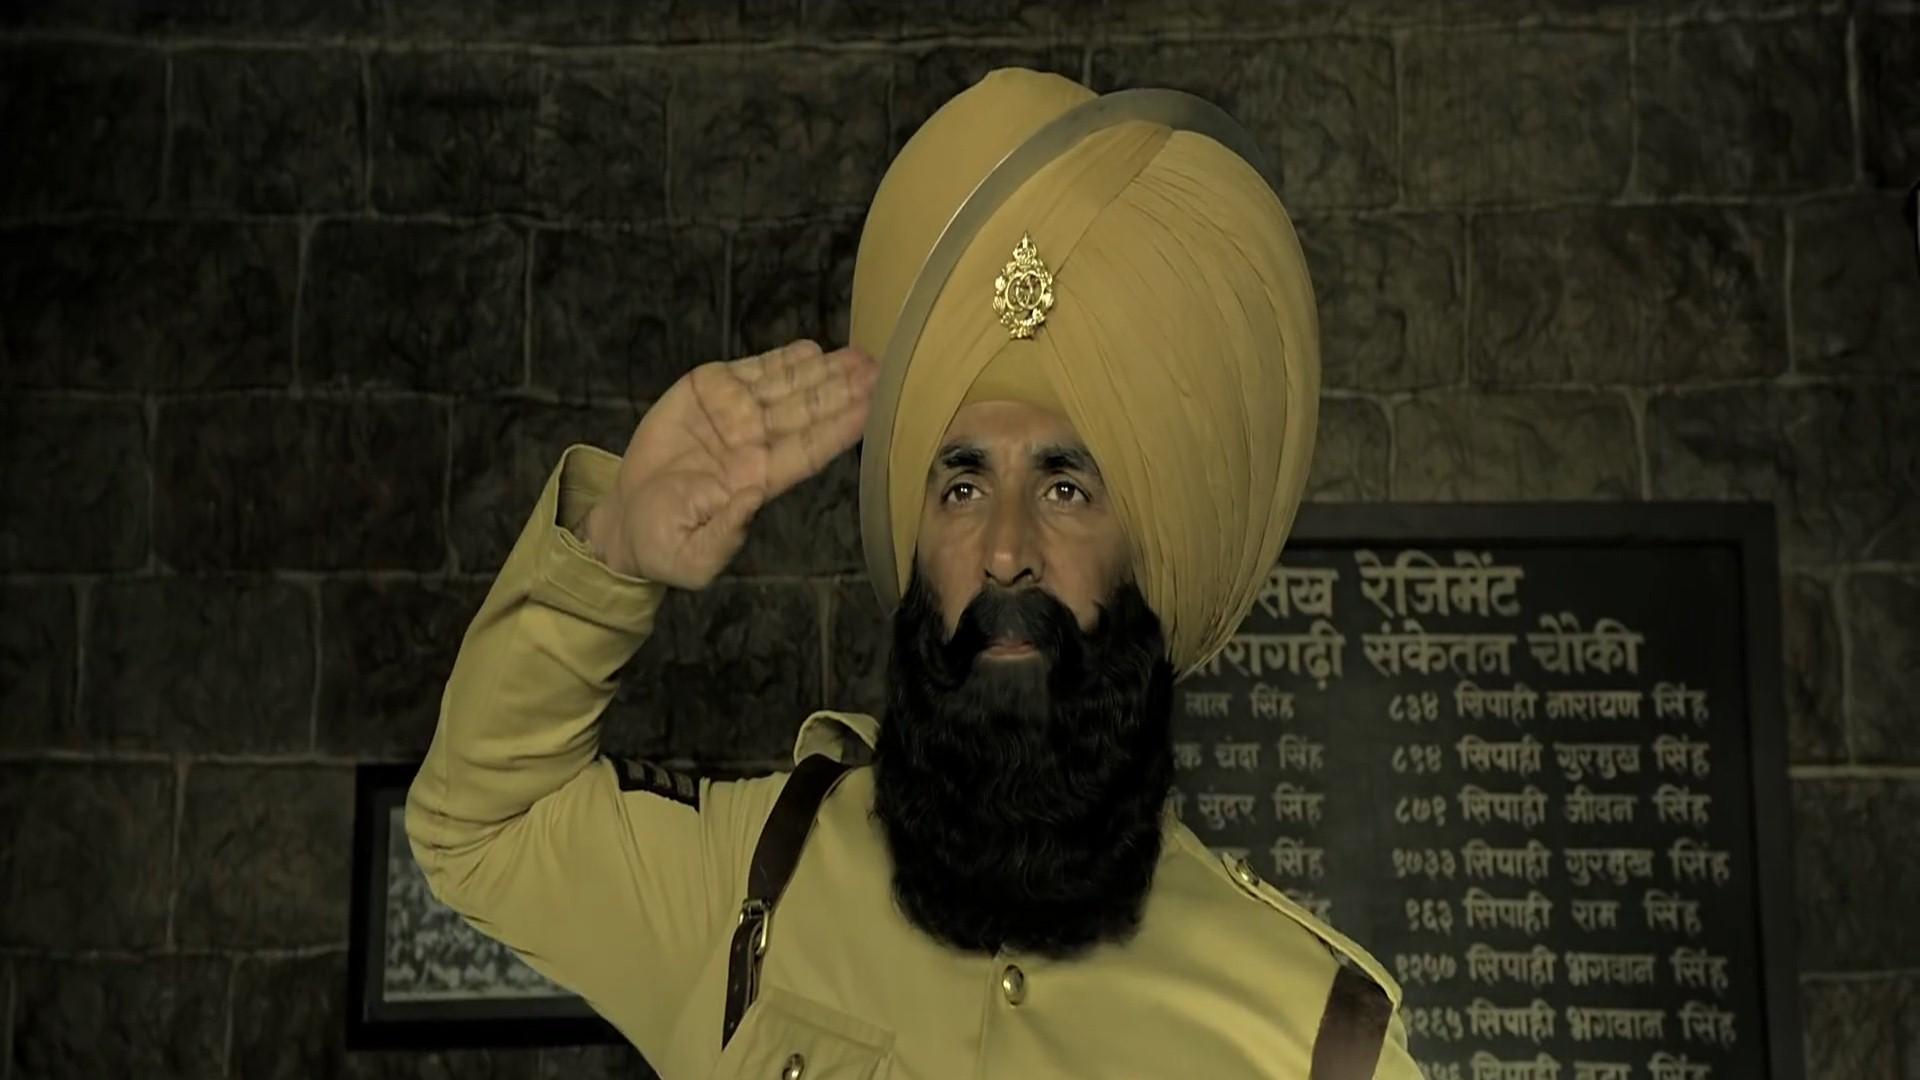 Army Man Akshay Kumar Salute in 2019 Film Kesari